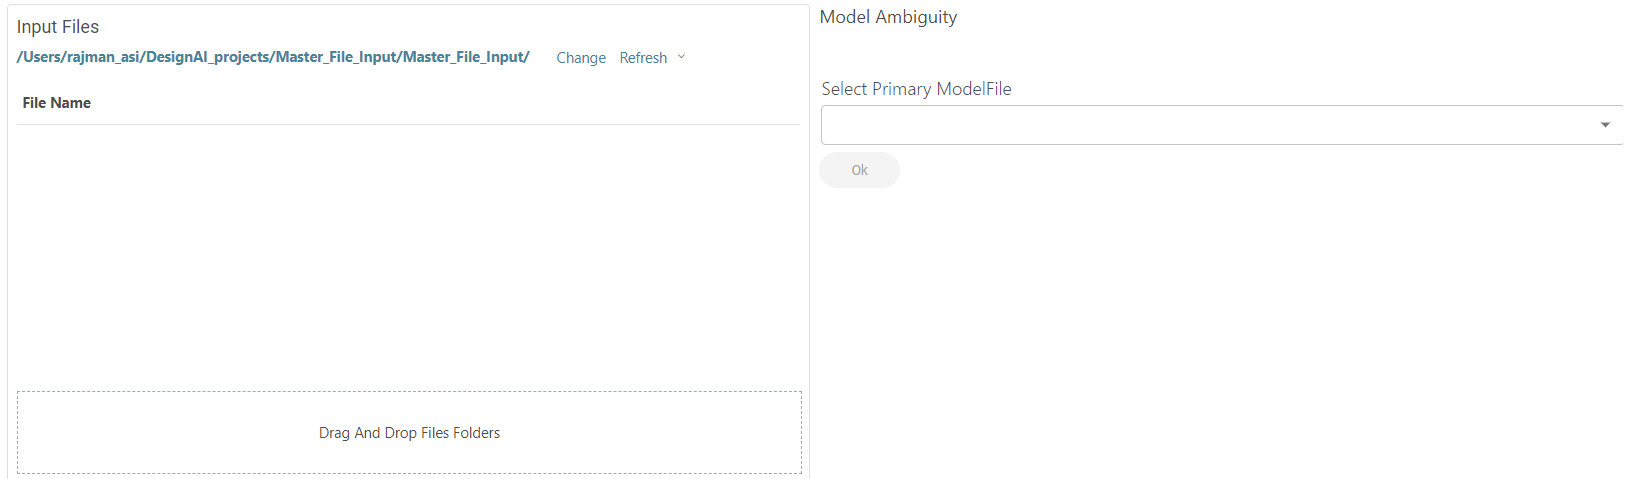 Model Ambiguity